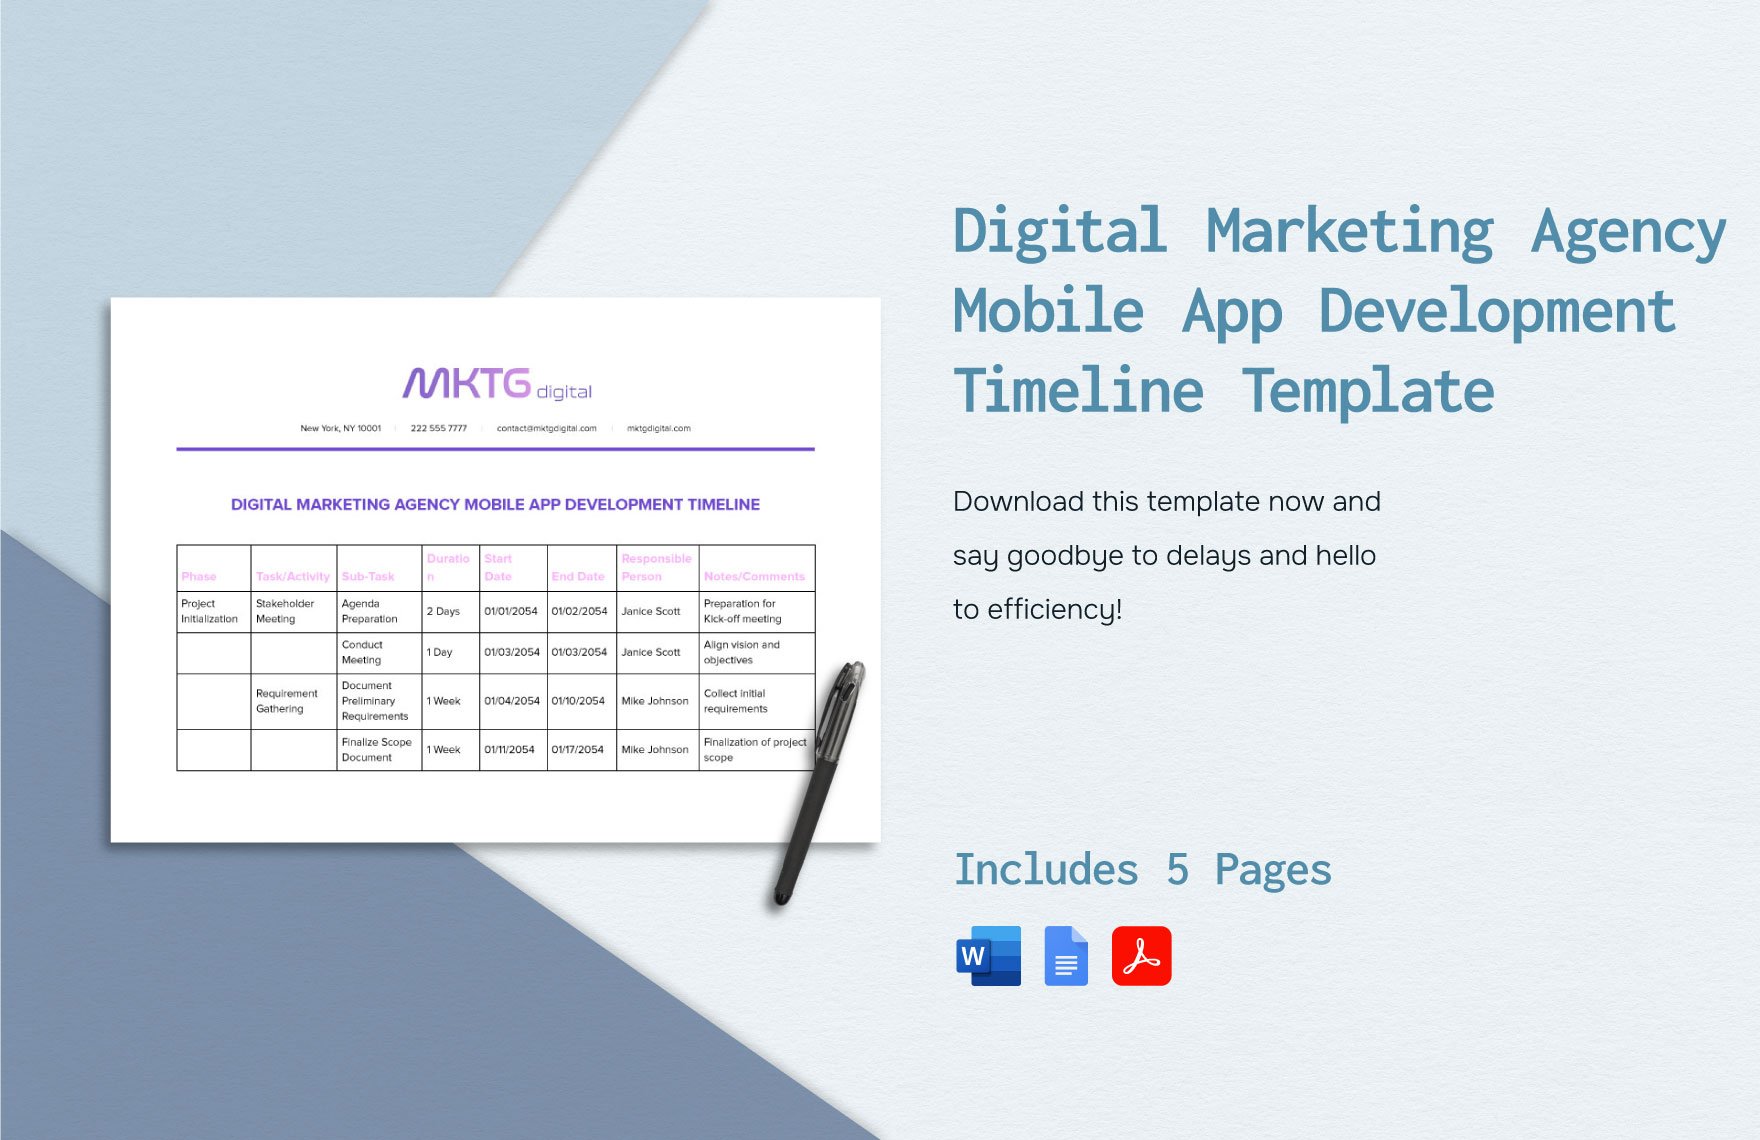 Digital Marketing Agency Mobile App Development Timeline Template